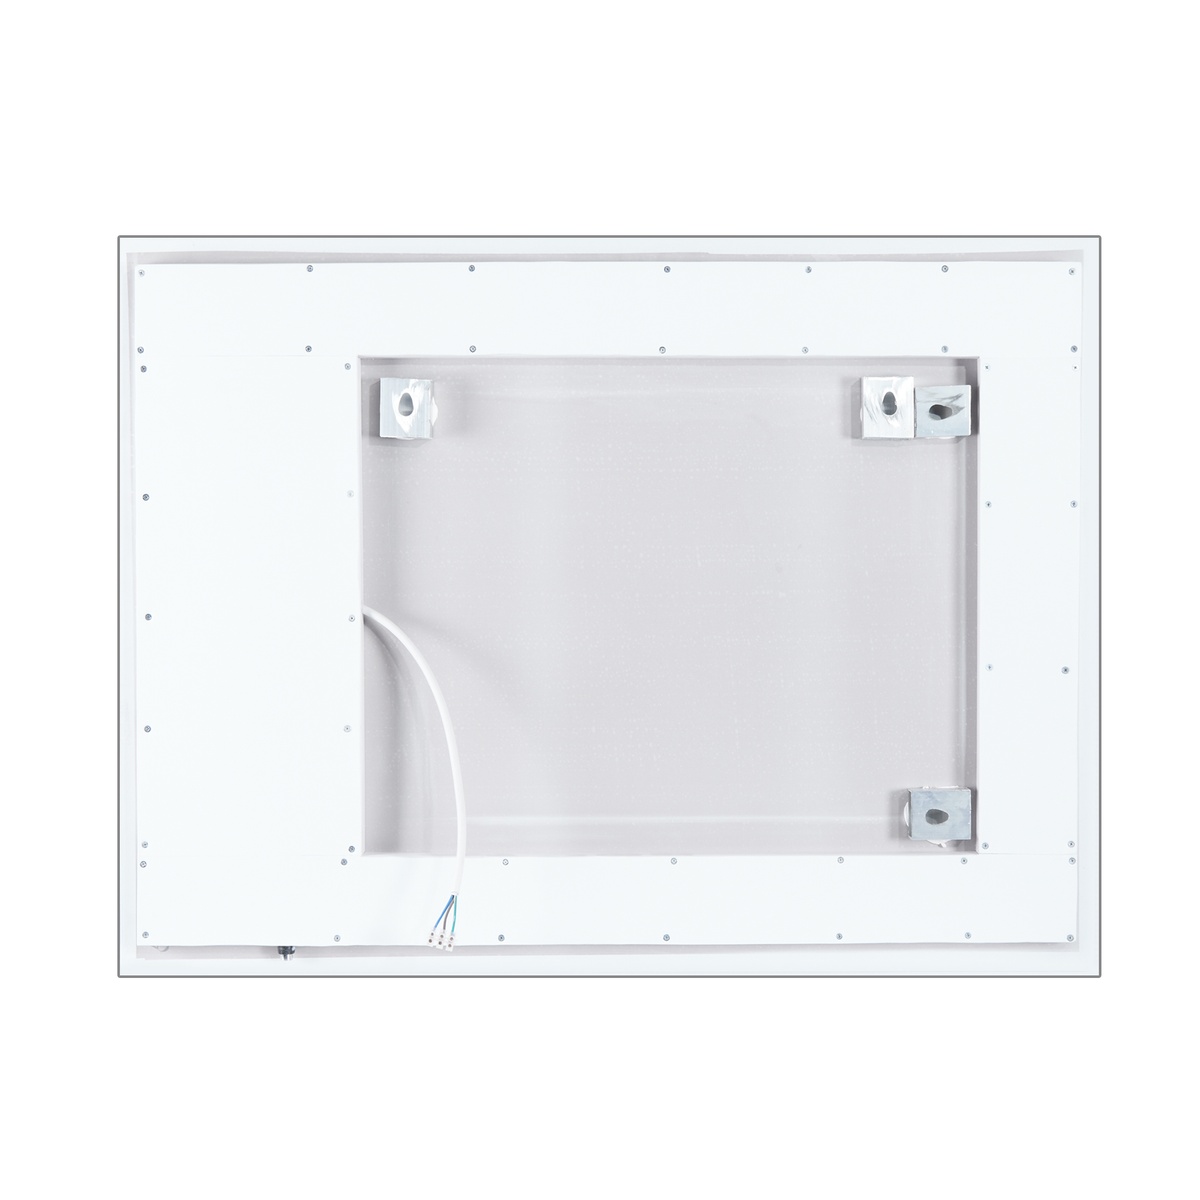 Зеркало прямоугольное для ванной Q-TAP Mideya Quadro 60см x 80см c подсветкой QT207814187080W